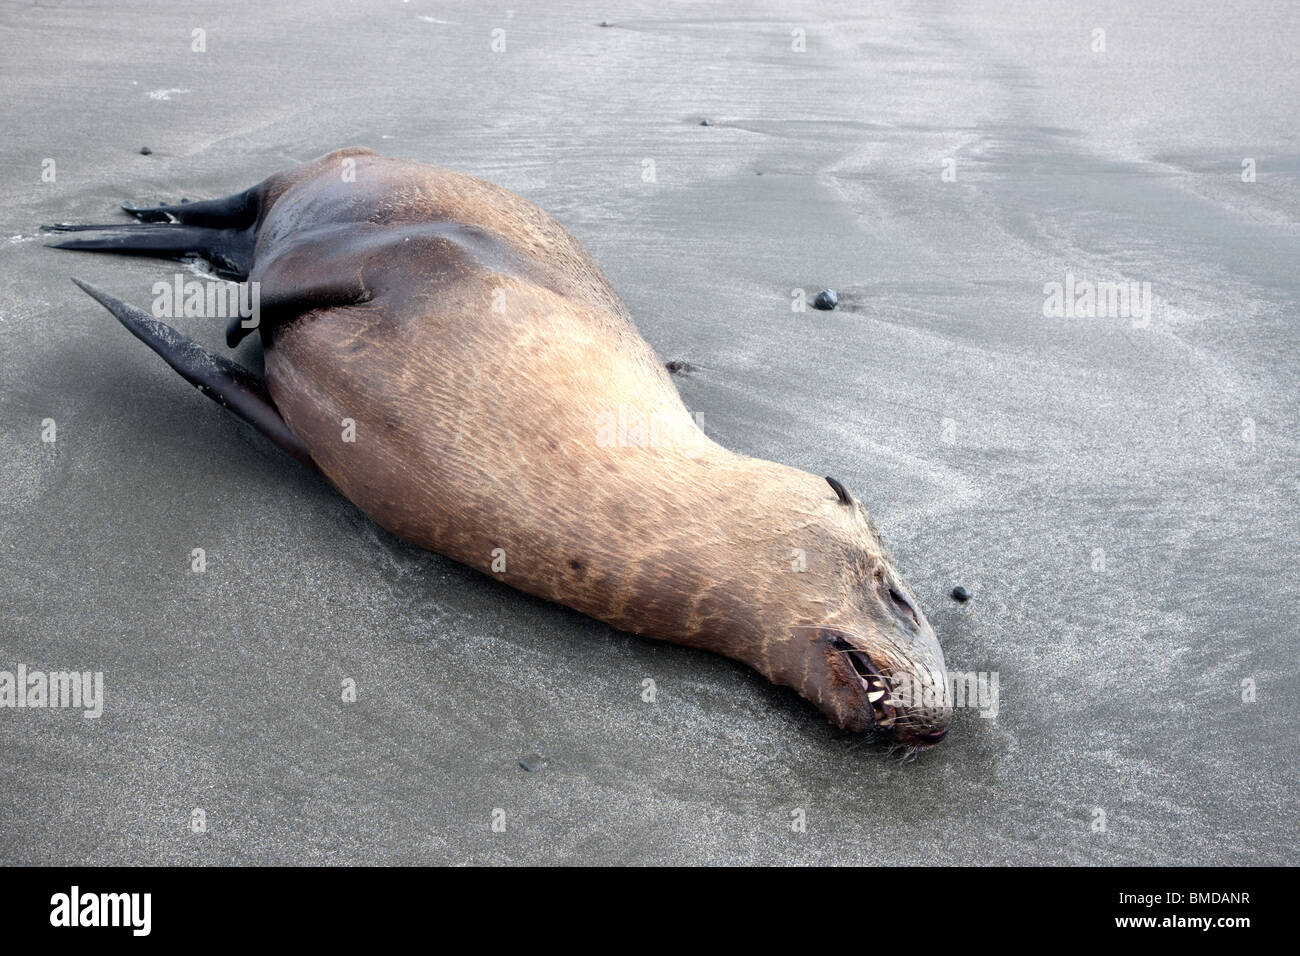 León marino inmaduros (yearling) fallecido, playa. Foto de stock